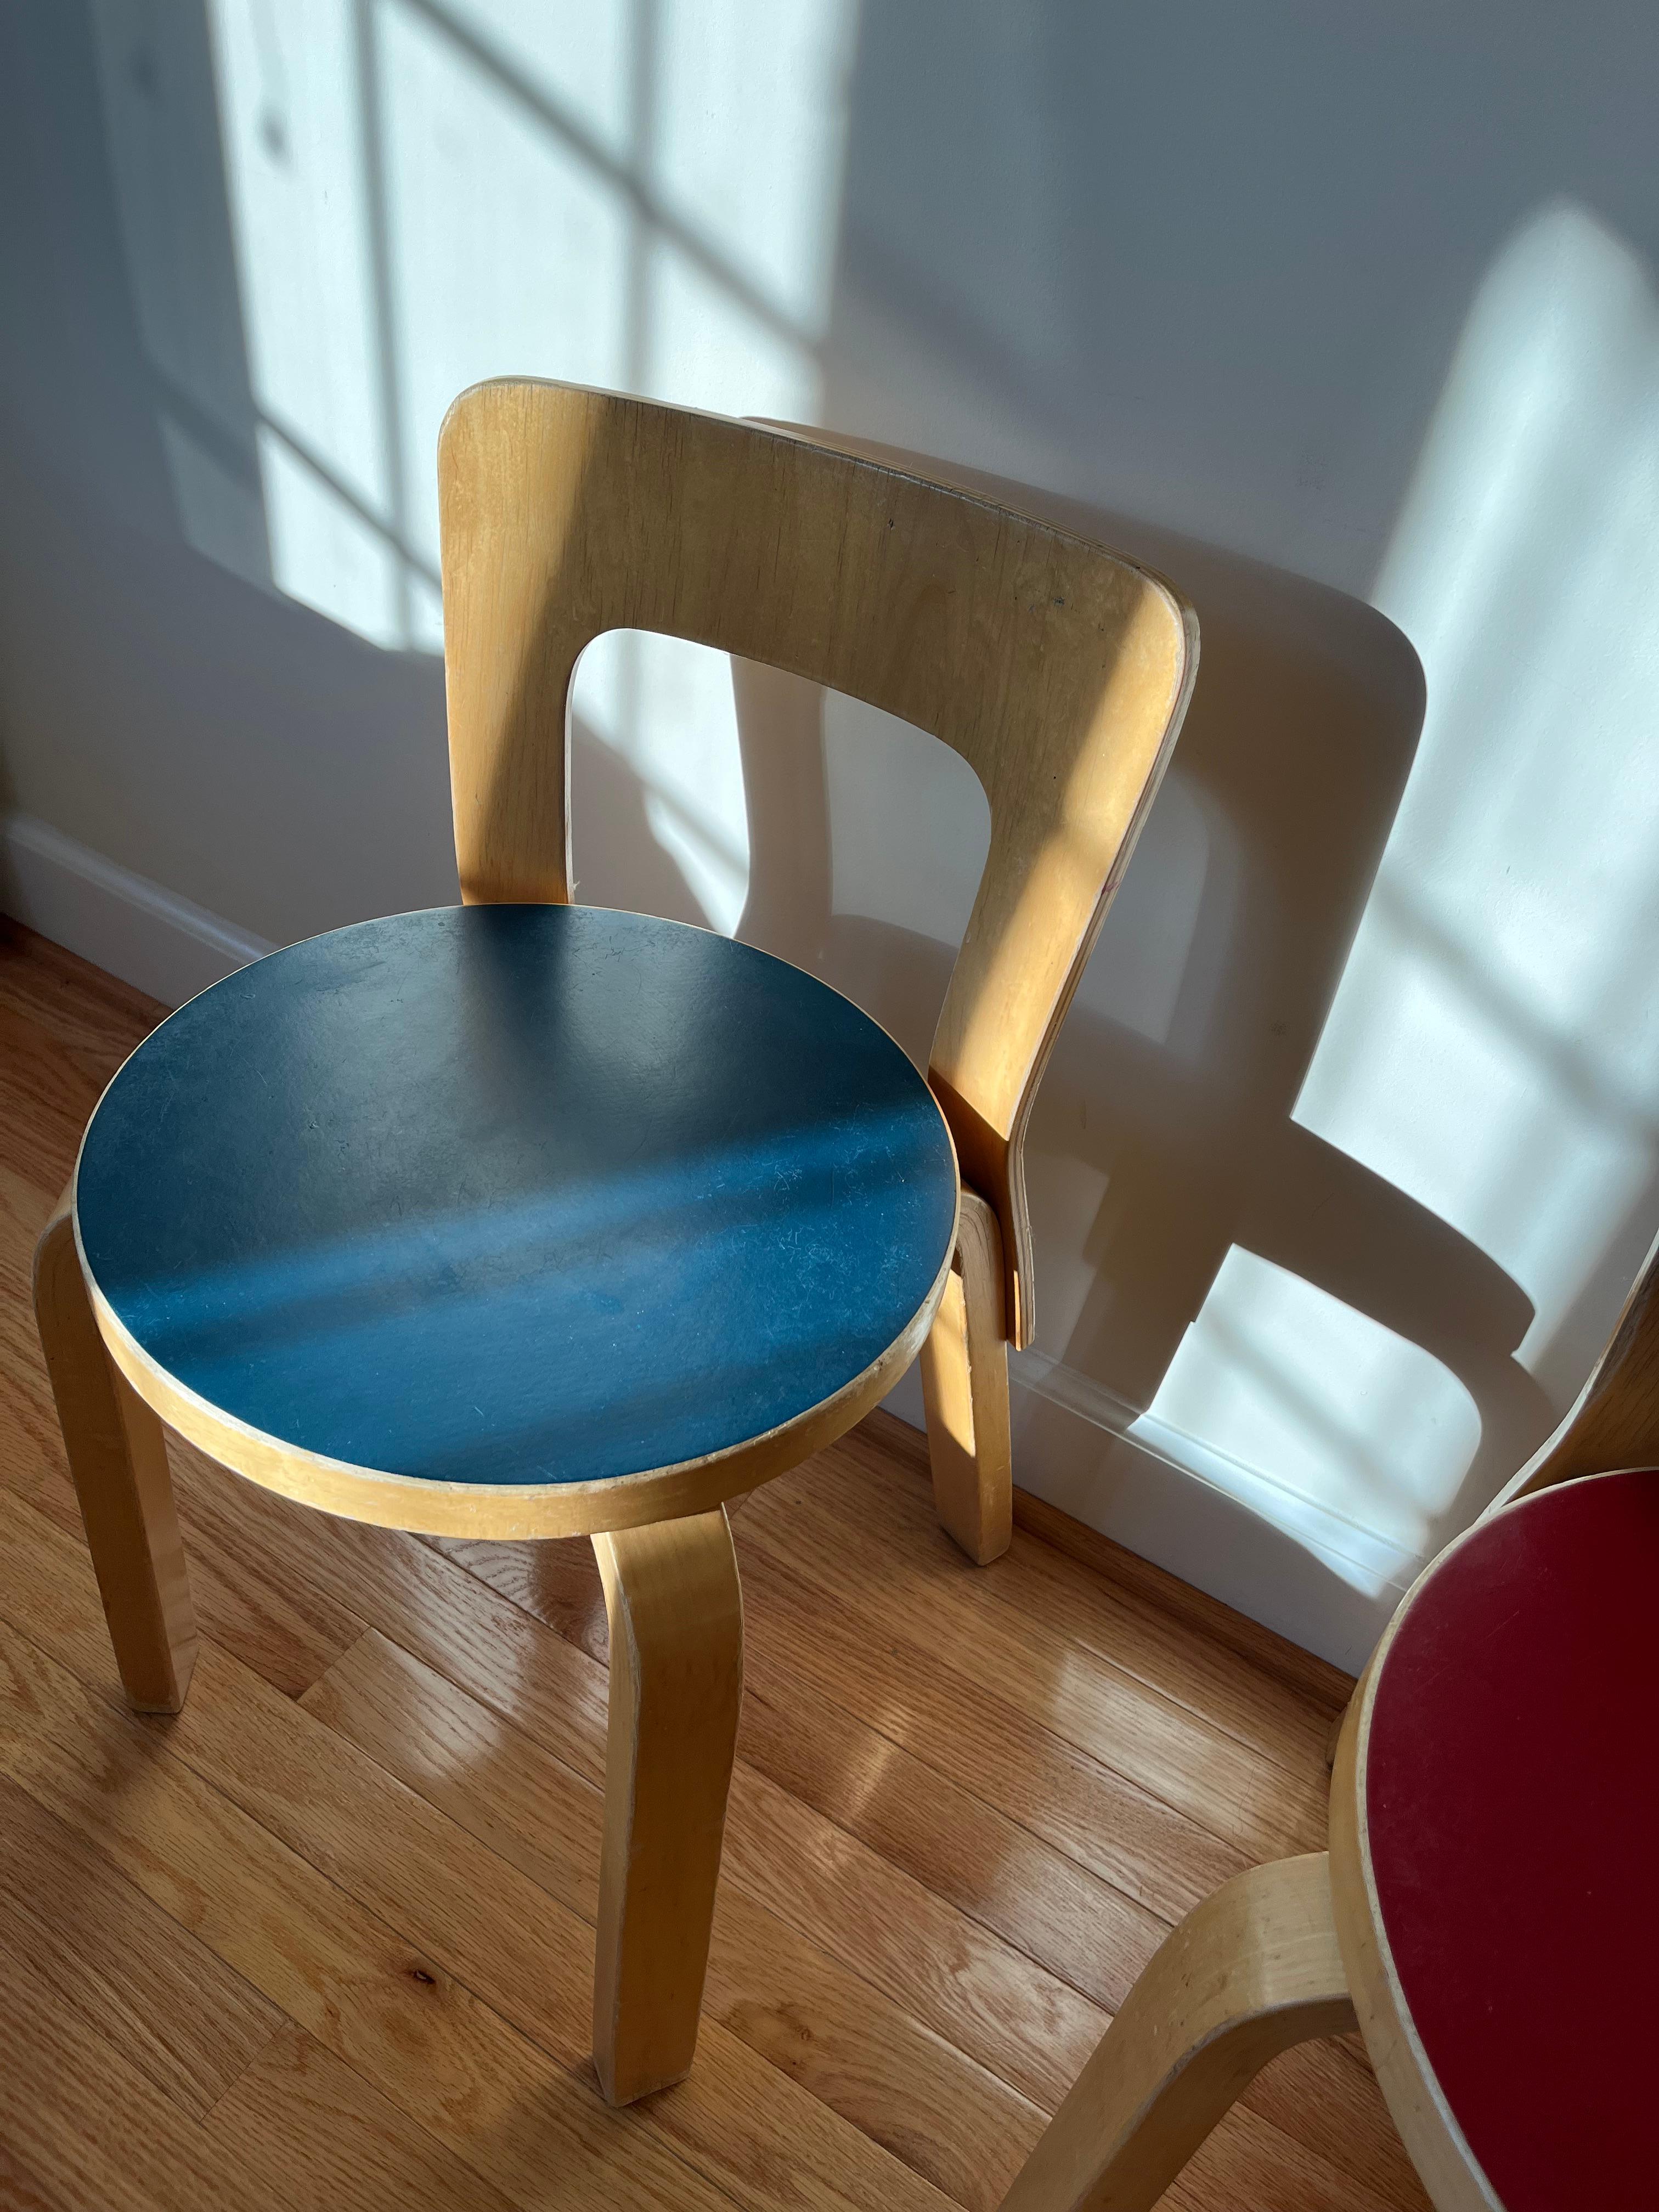 Mid-20th Century Chair 65 by Alvar Aalto for Artek (Blue Linoleum)